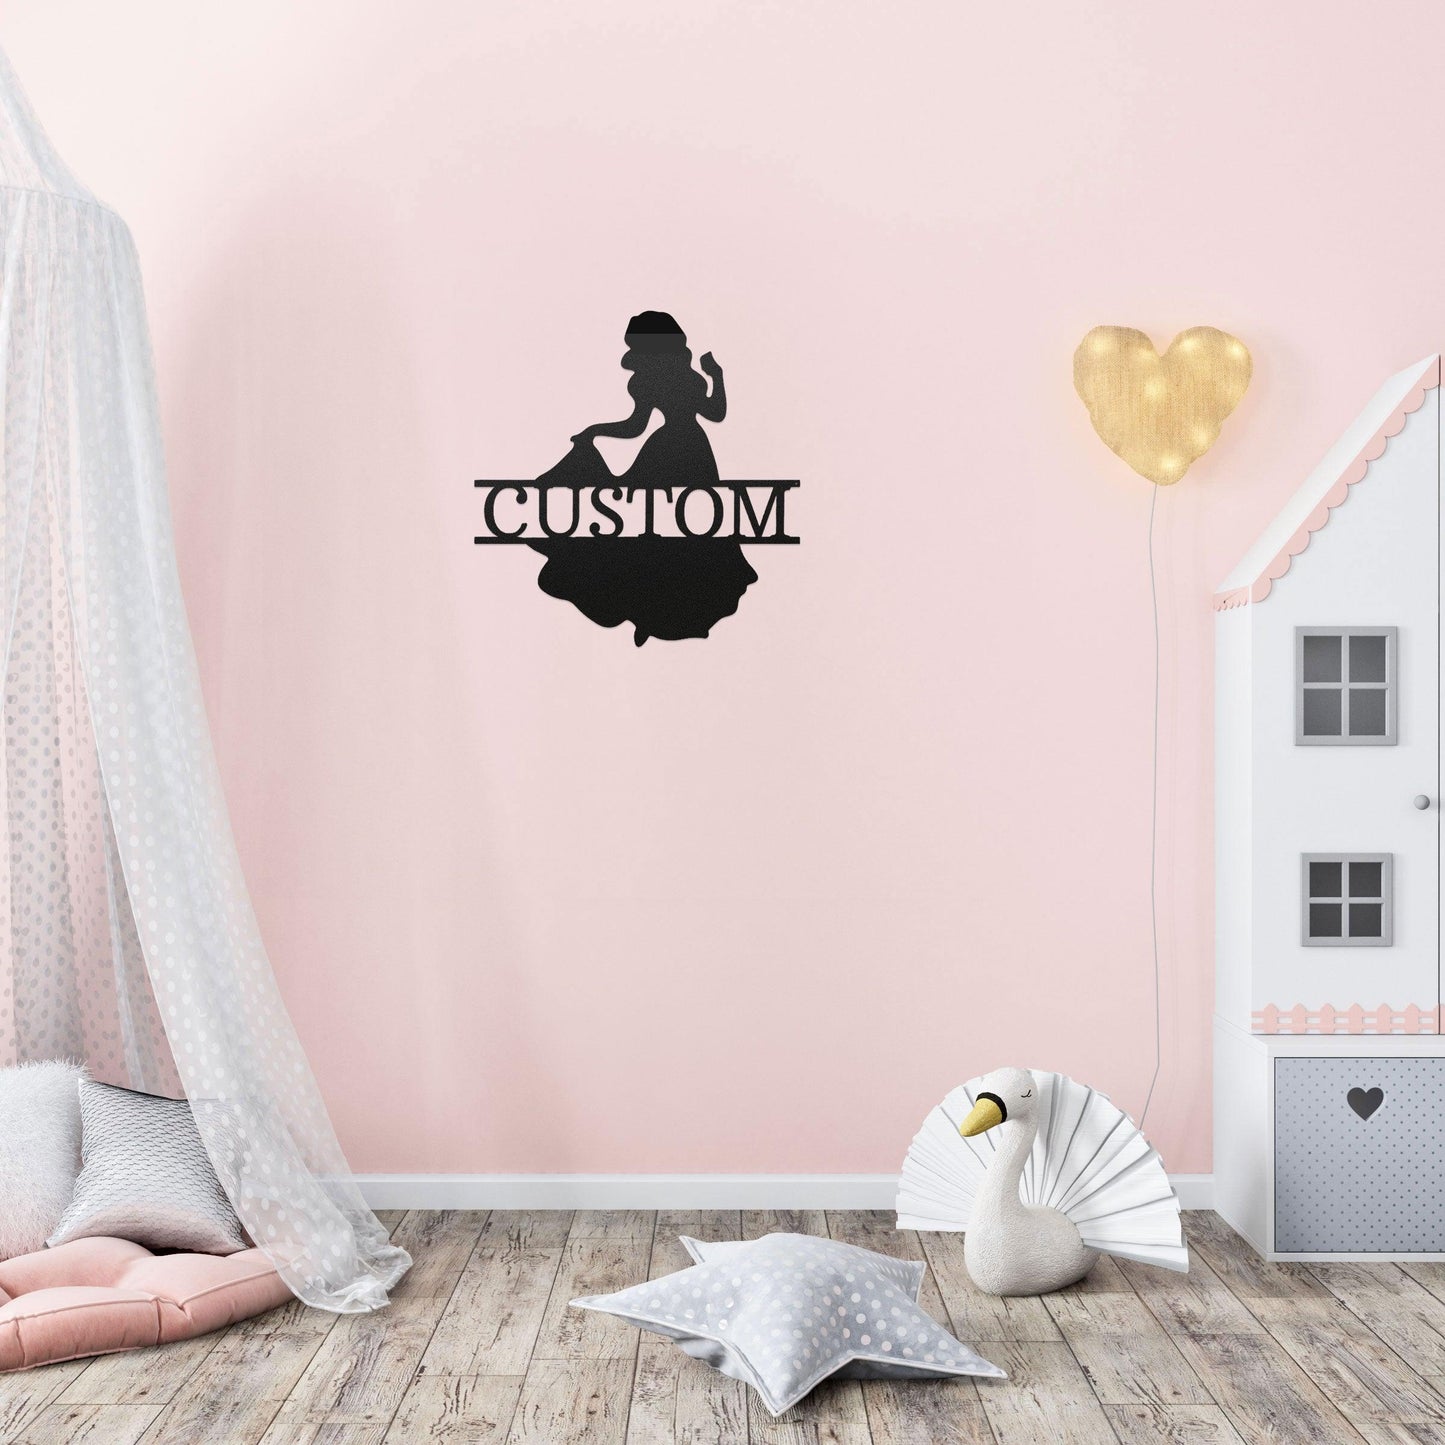 Princess Snow White Personalized Name Metal Art Wall Sign - Mallard Moon Gift Shop